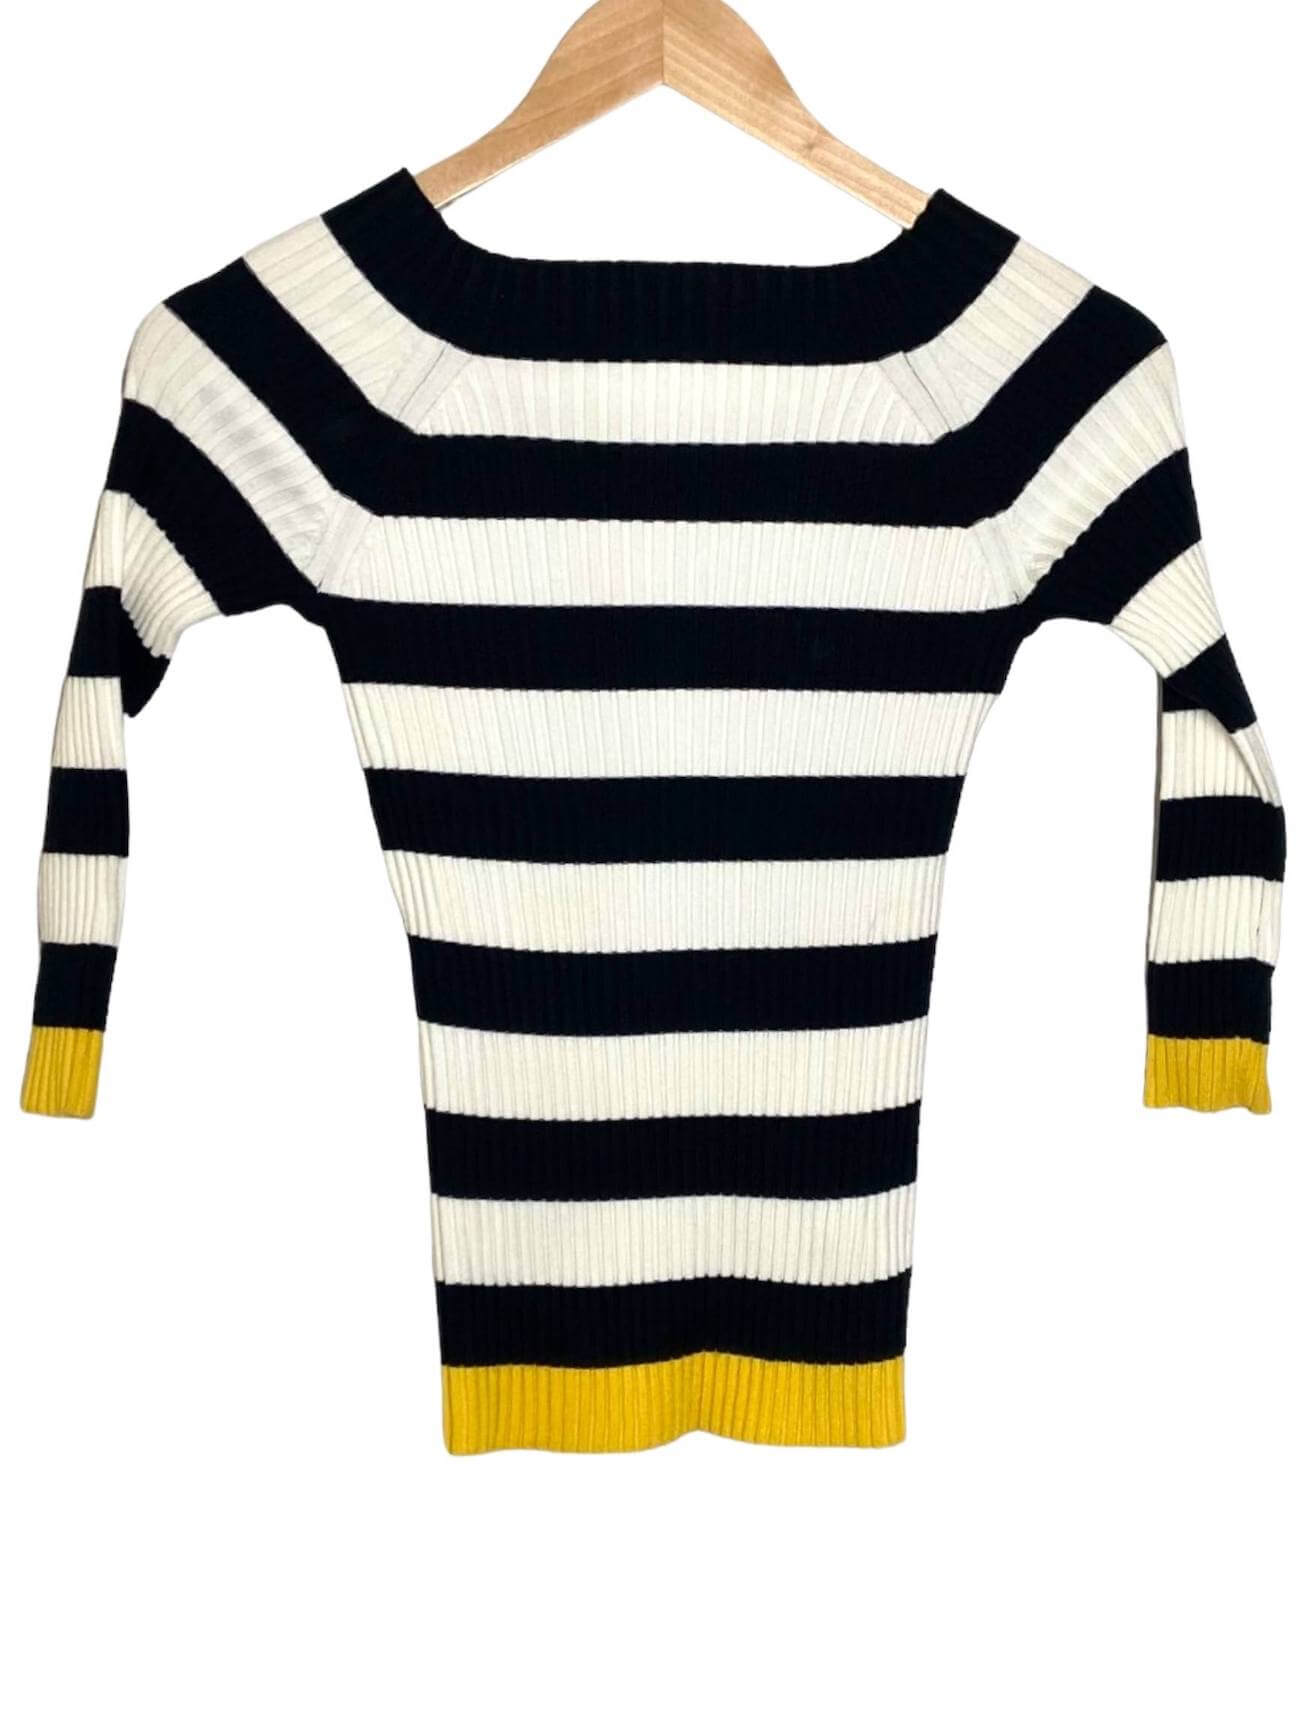 Bright Winter BAILEY 44 black white yellow stripe sweater